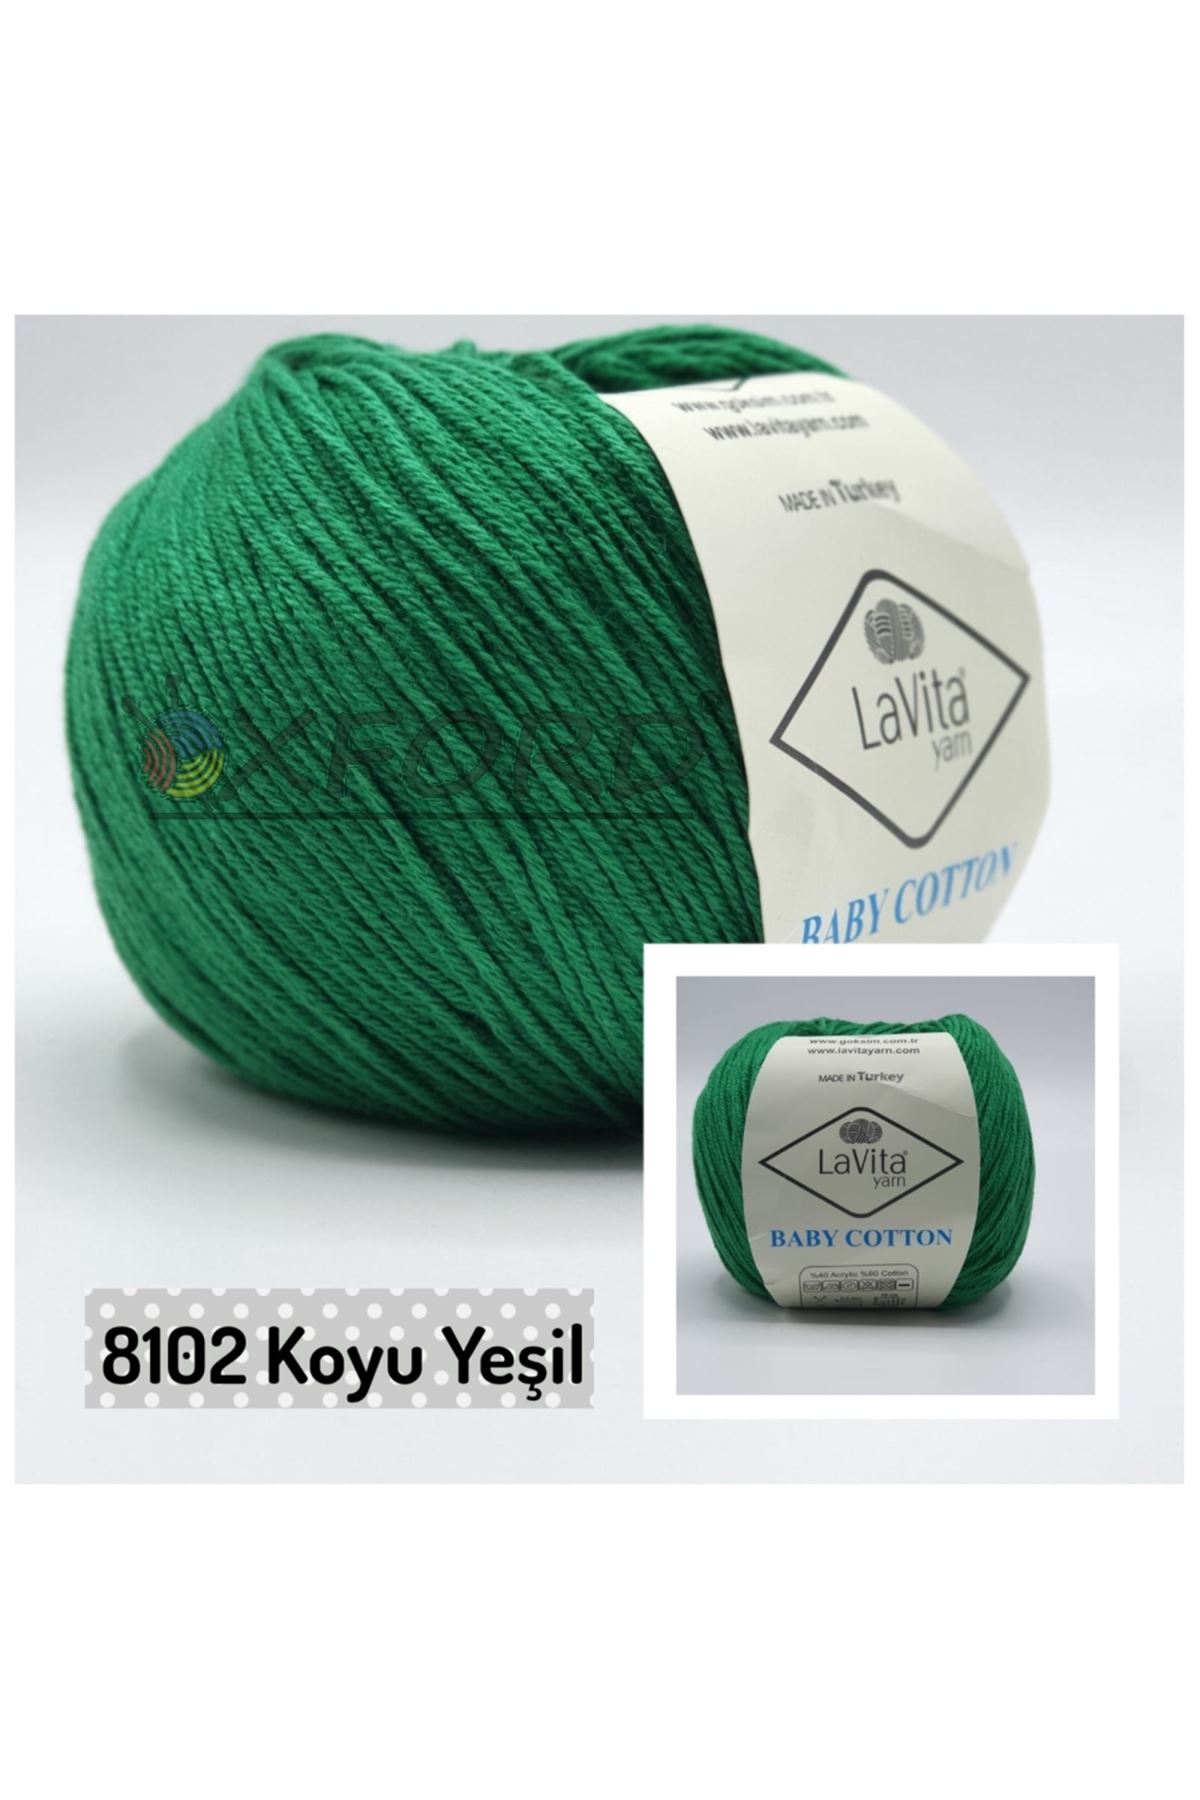 Lavita Baby Cotton 8102 Koyu Yeşil